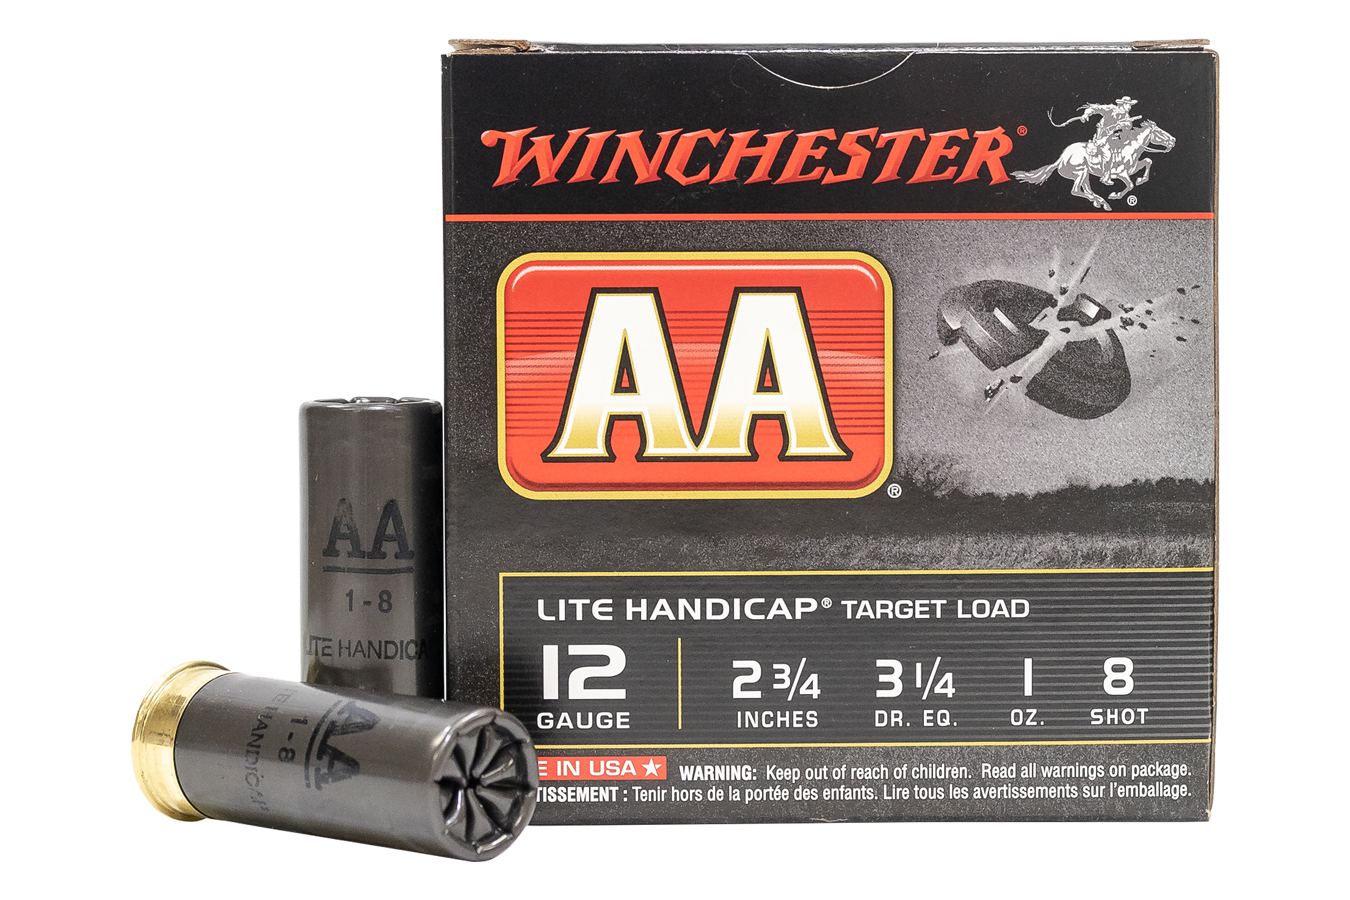 WINCHESTER AMMO 12 GA 2-3/4 IN 1 OZ LIGHT HANDICAP